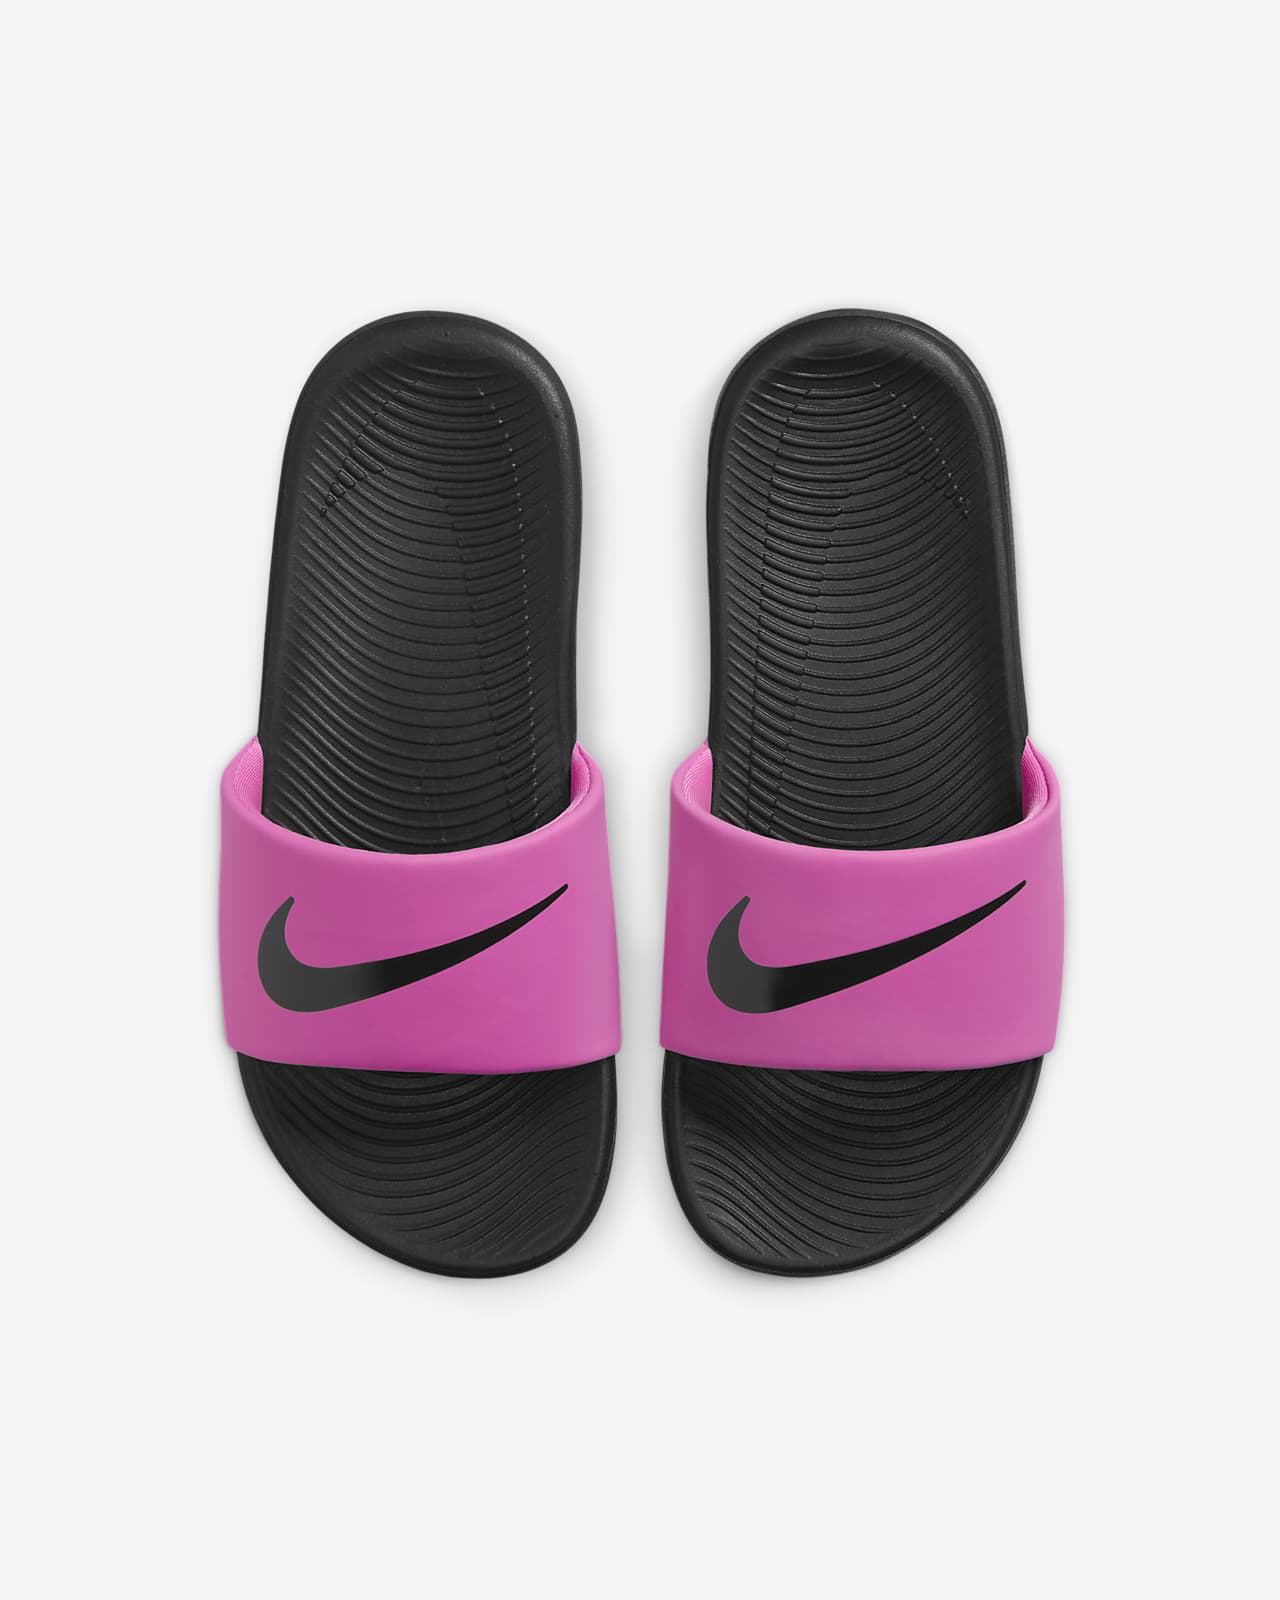 Kids\' Nike Kawa Slides. Little/Big